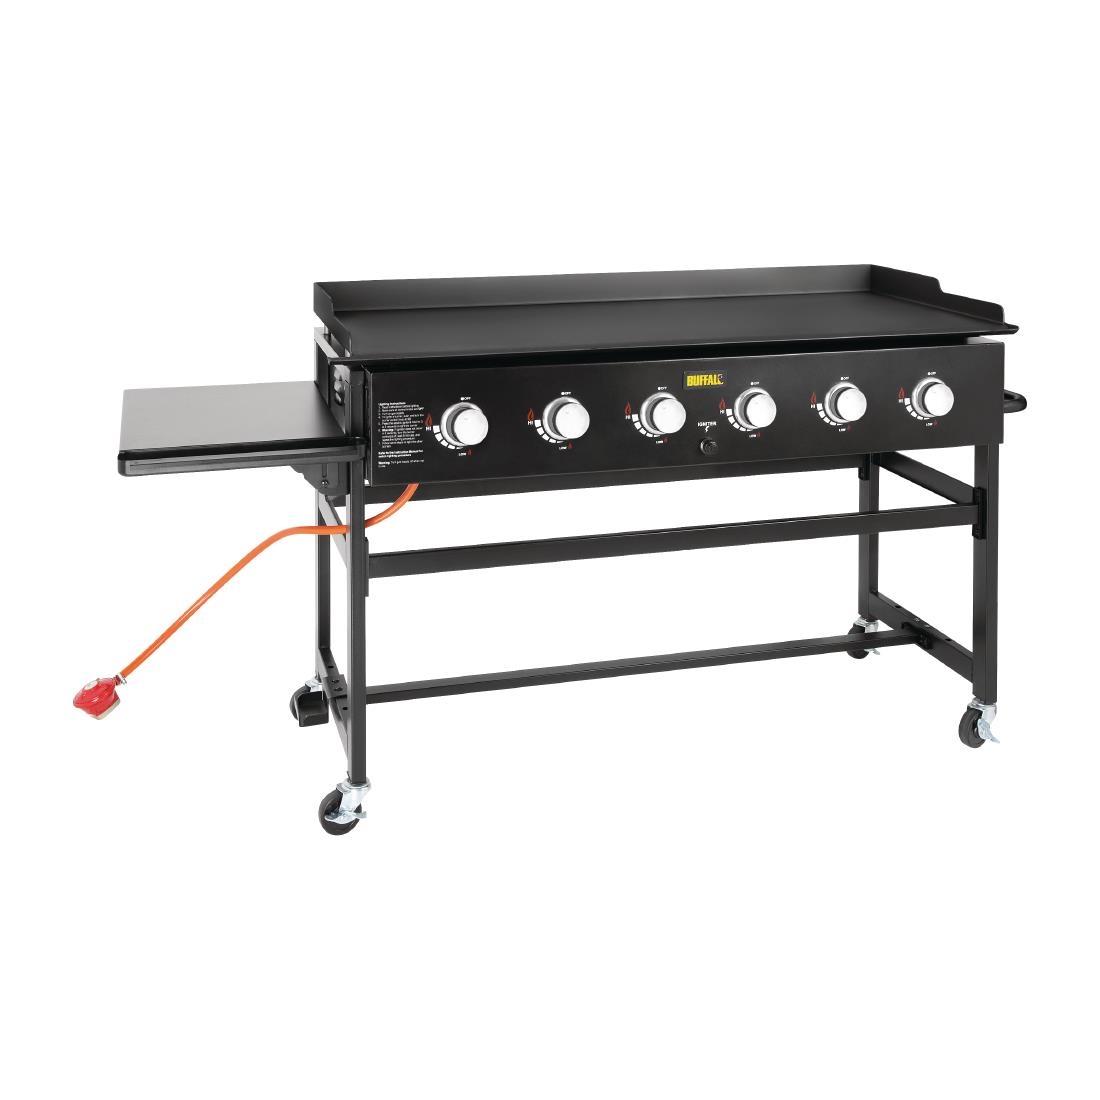 Buffalo 6 Burner LPG Barbecue Griddle - CY265  - 1